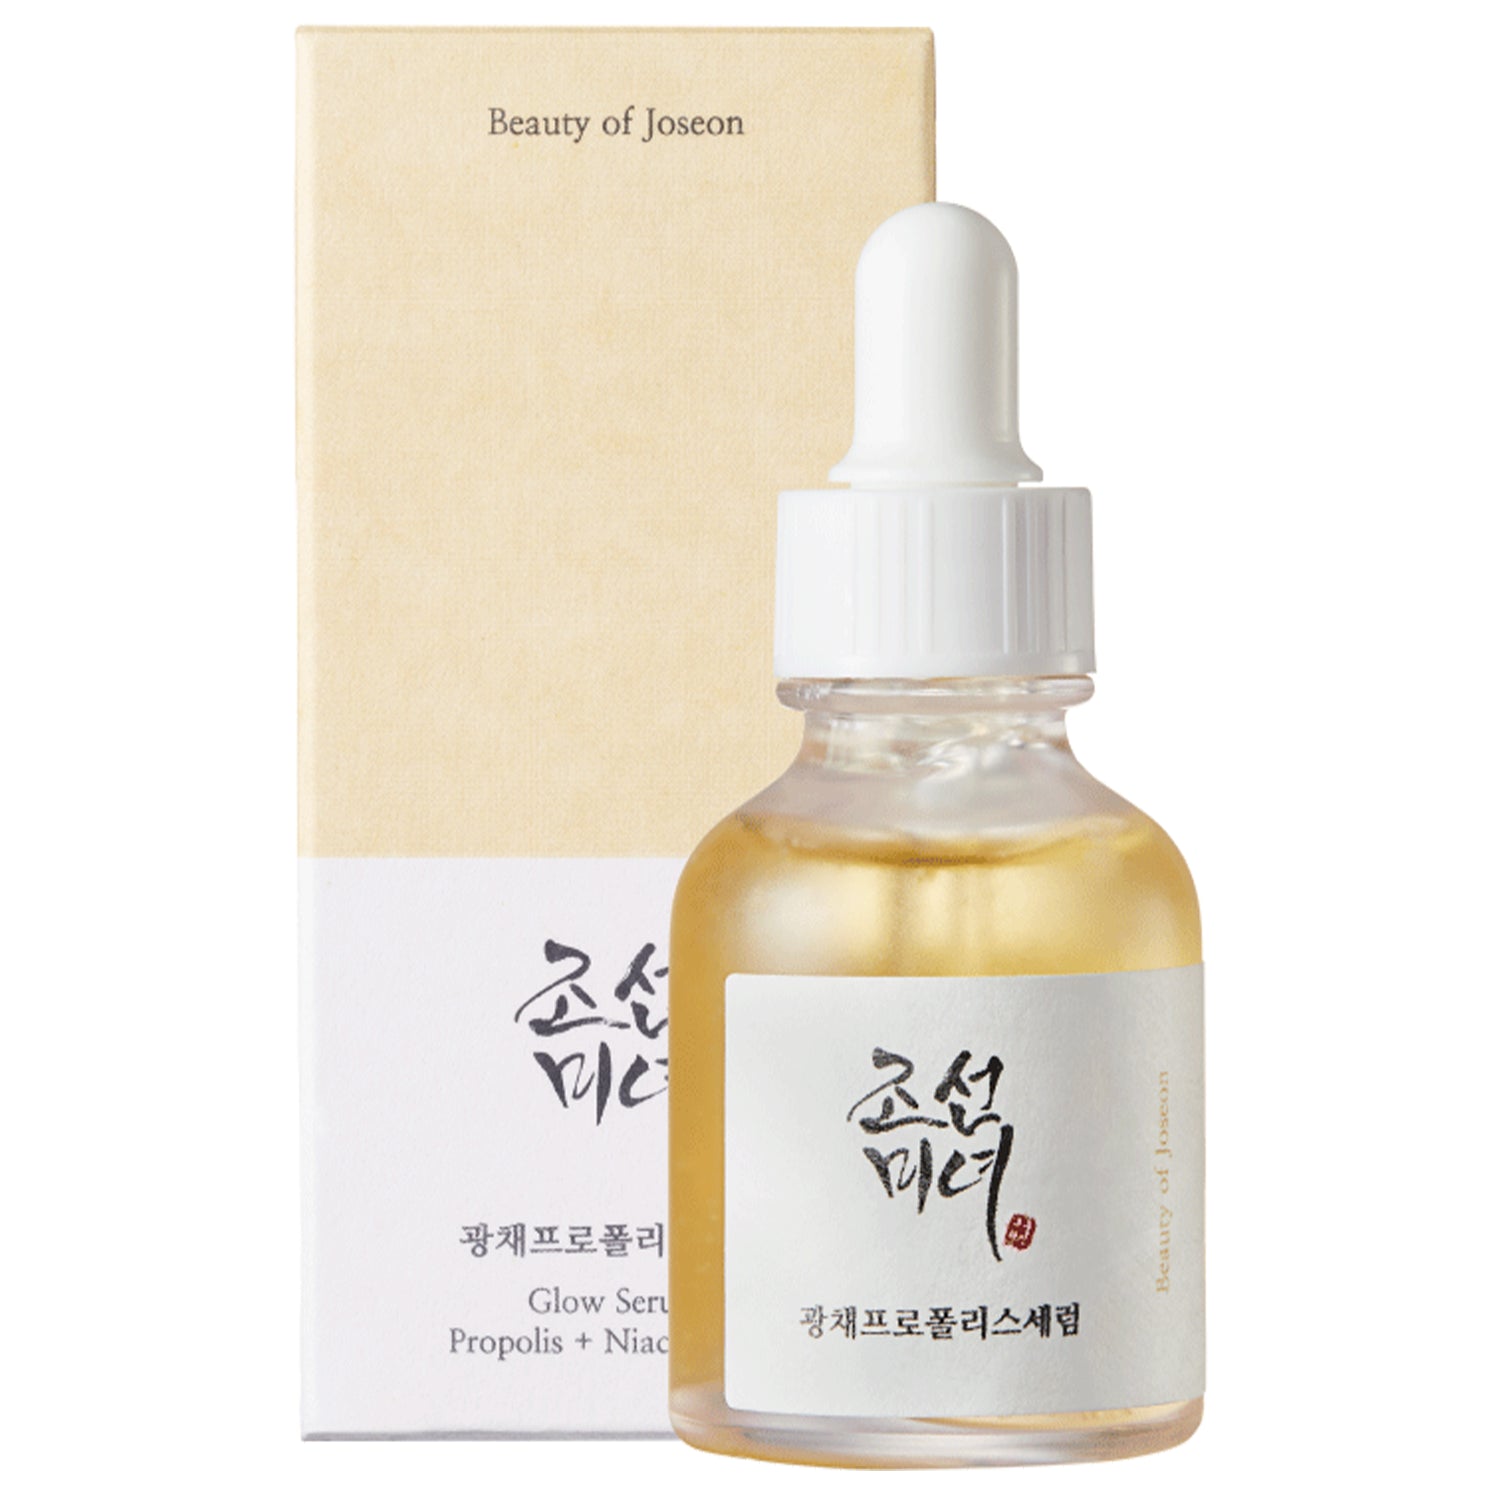 Beauty of Joseon - Glow Serum Propolis and Niacinamide - 30ml